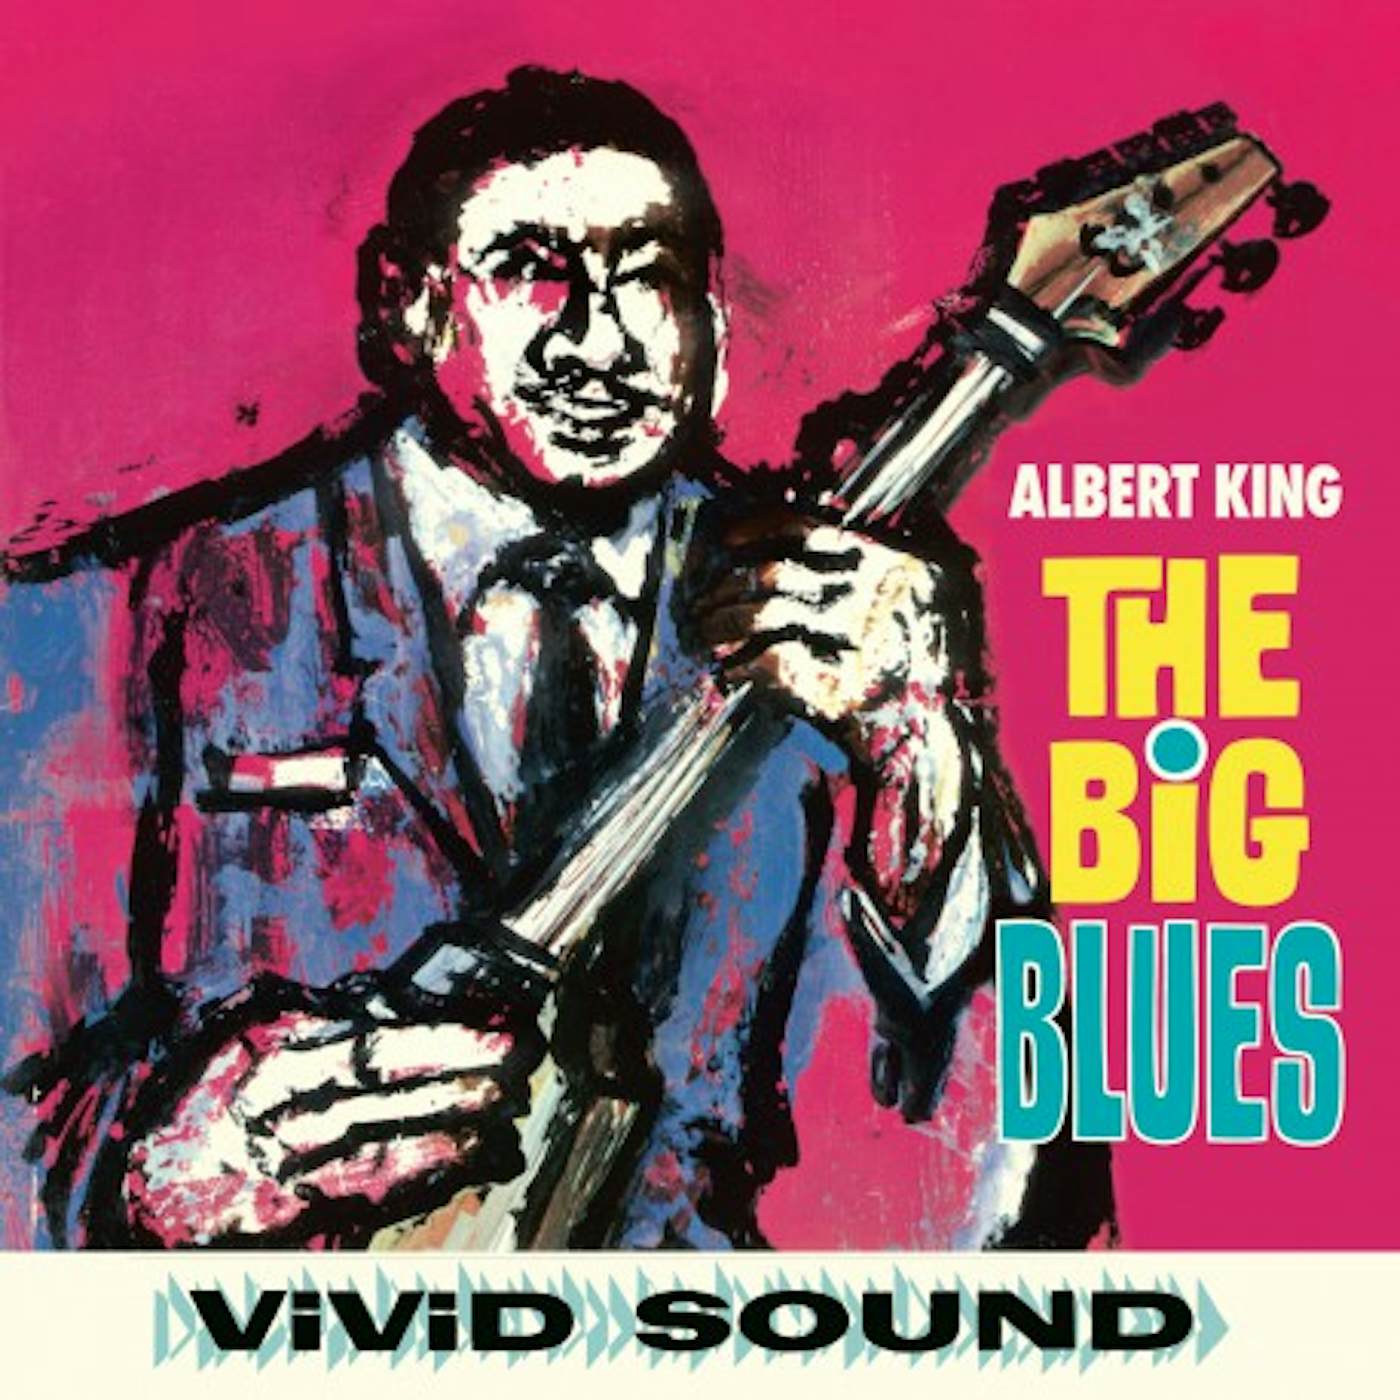 Albert King BIG BLUES  (BONUS TRACKS) Vinyl Record - Blue Vinyl, Colored Vinyl, Limited Edition, 180 Gram Pressing